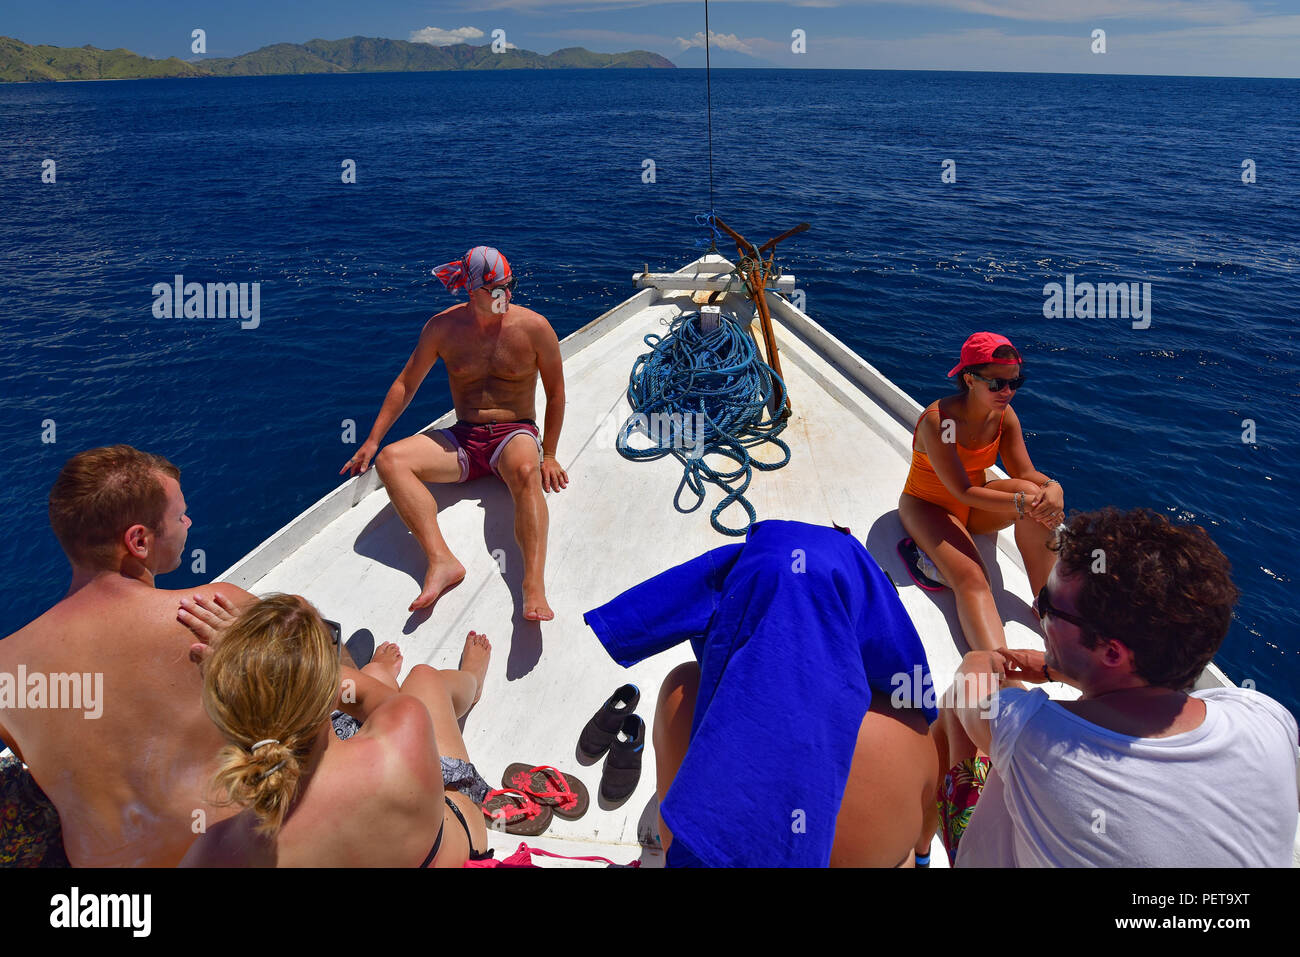 People enjoying sunbath on the deck of a boat on the sea Stock Photo